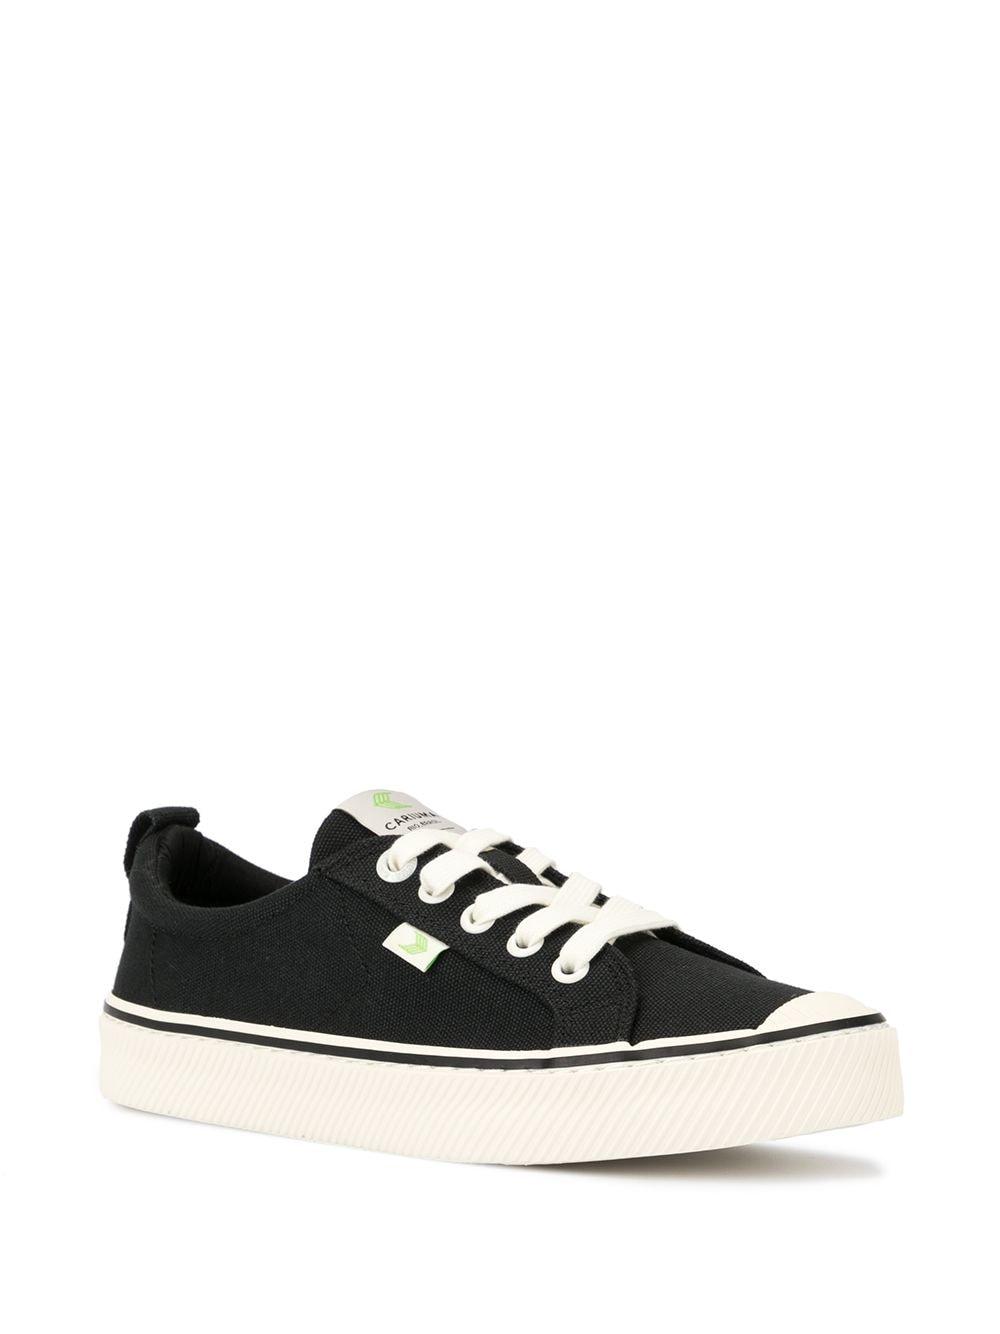 CARIUMA Oca Low Stripe Black Canvas Sneaker - Lyst